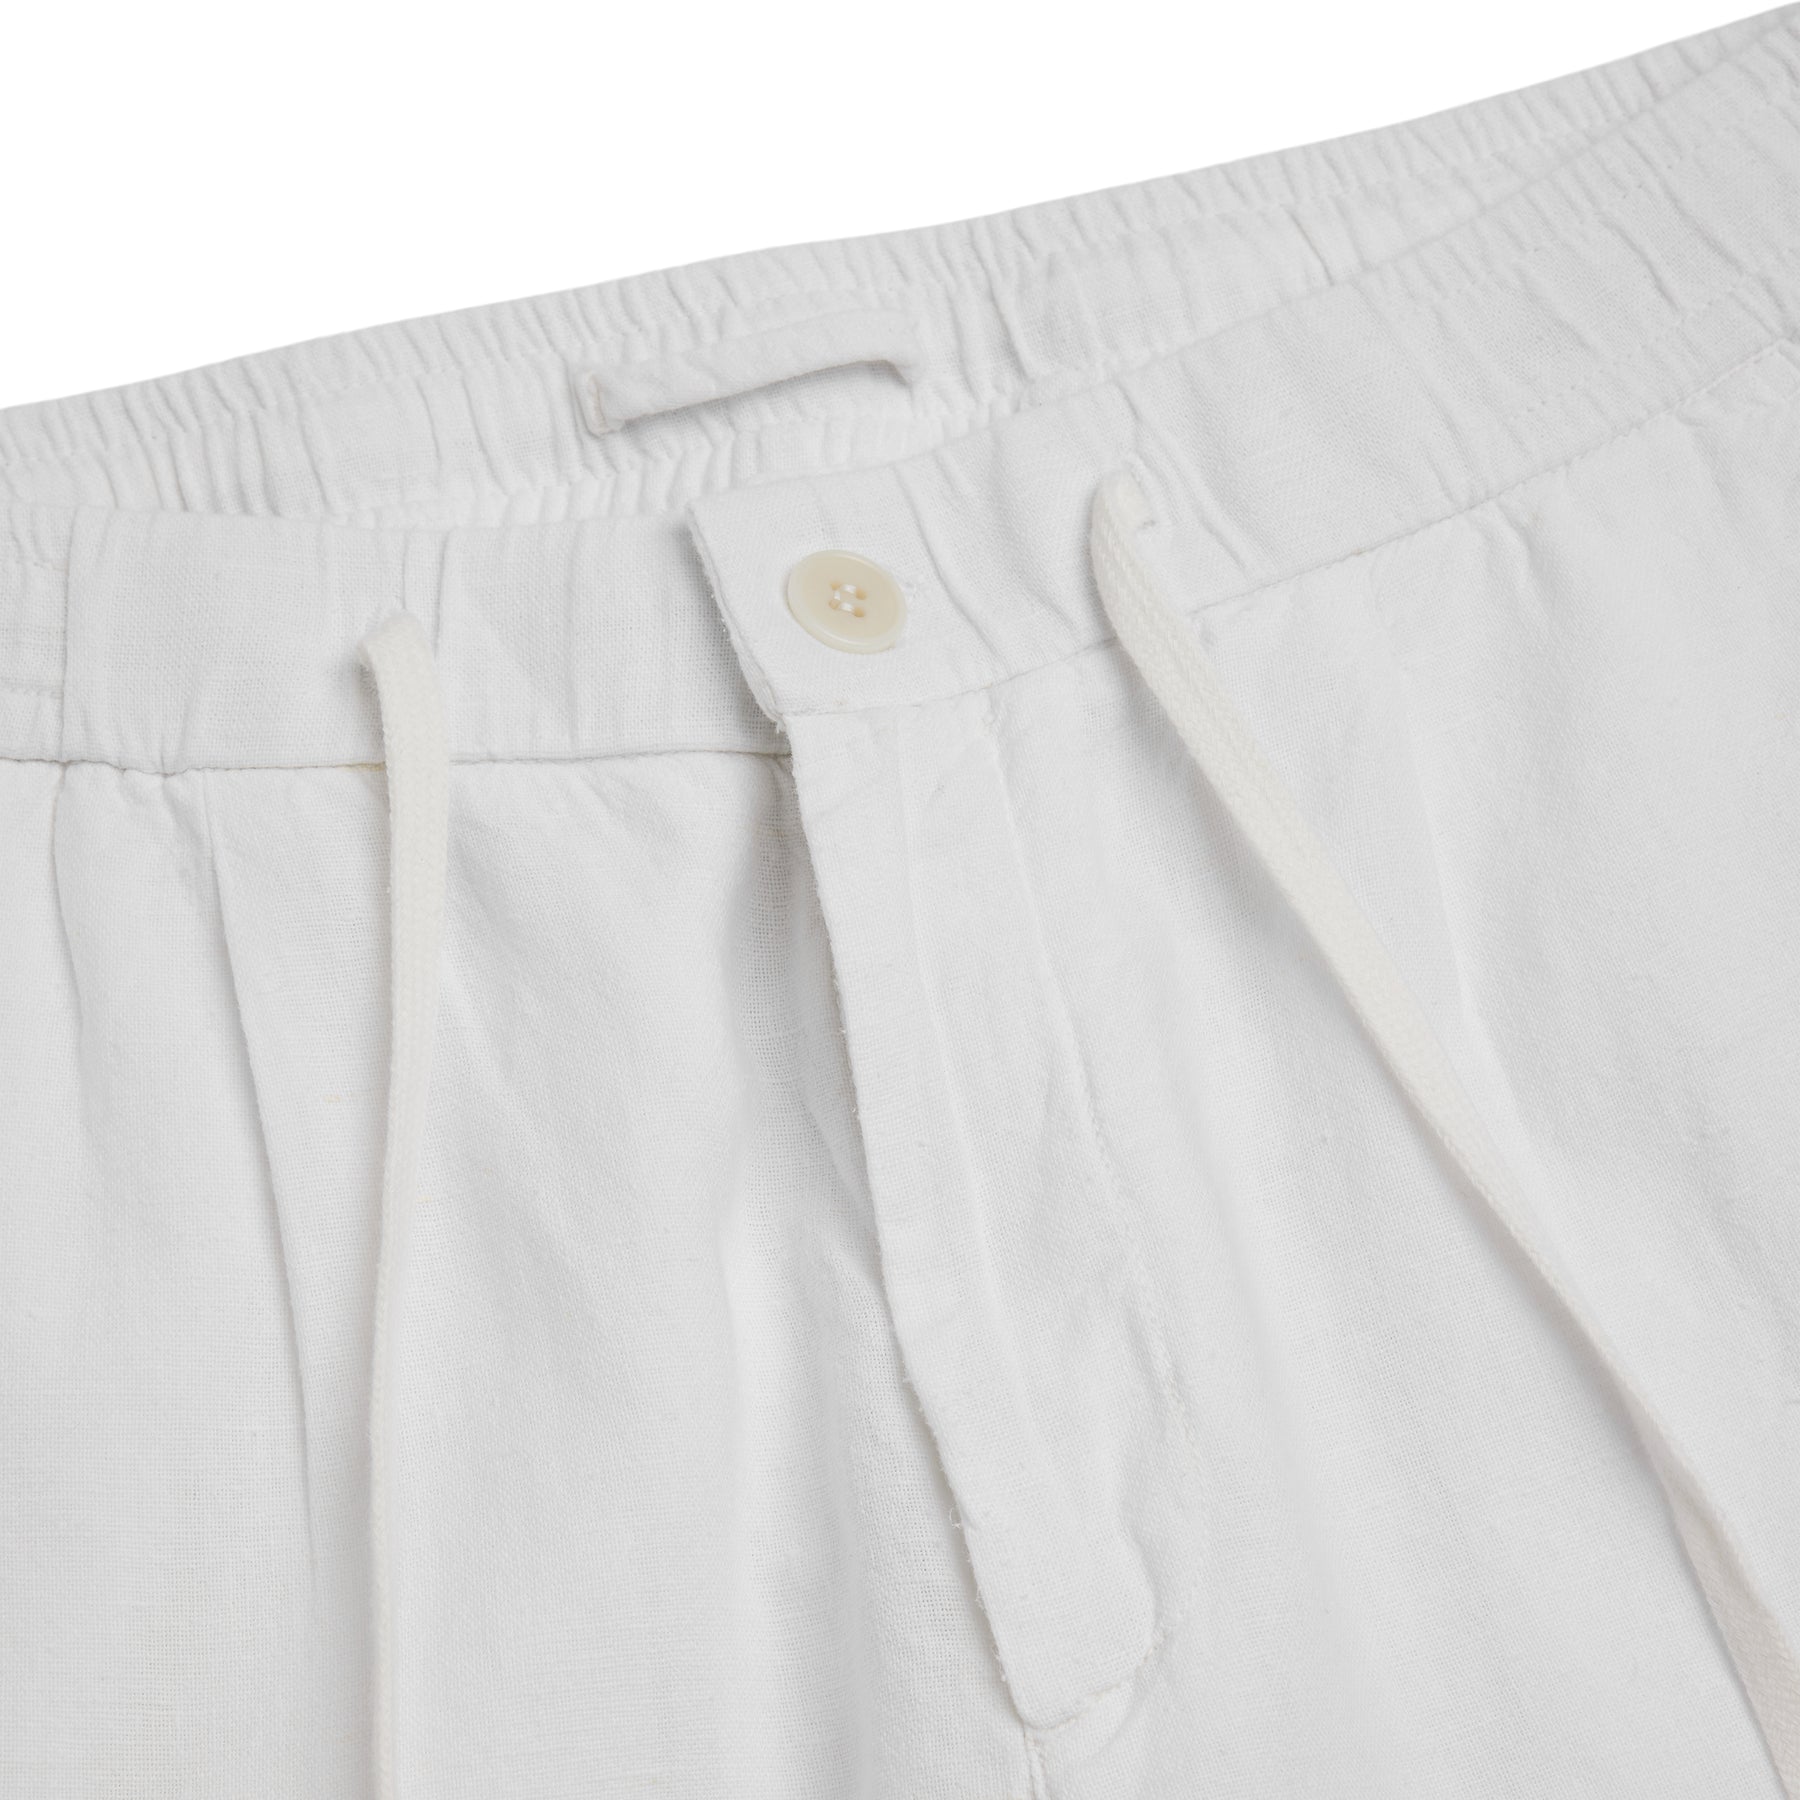 Linen Pants White